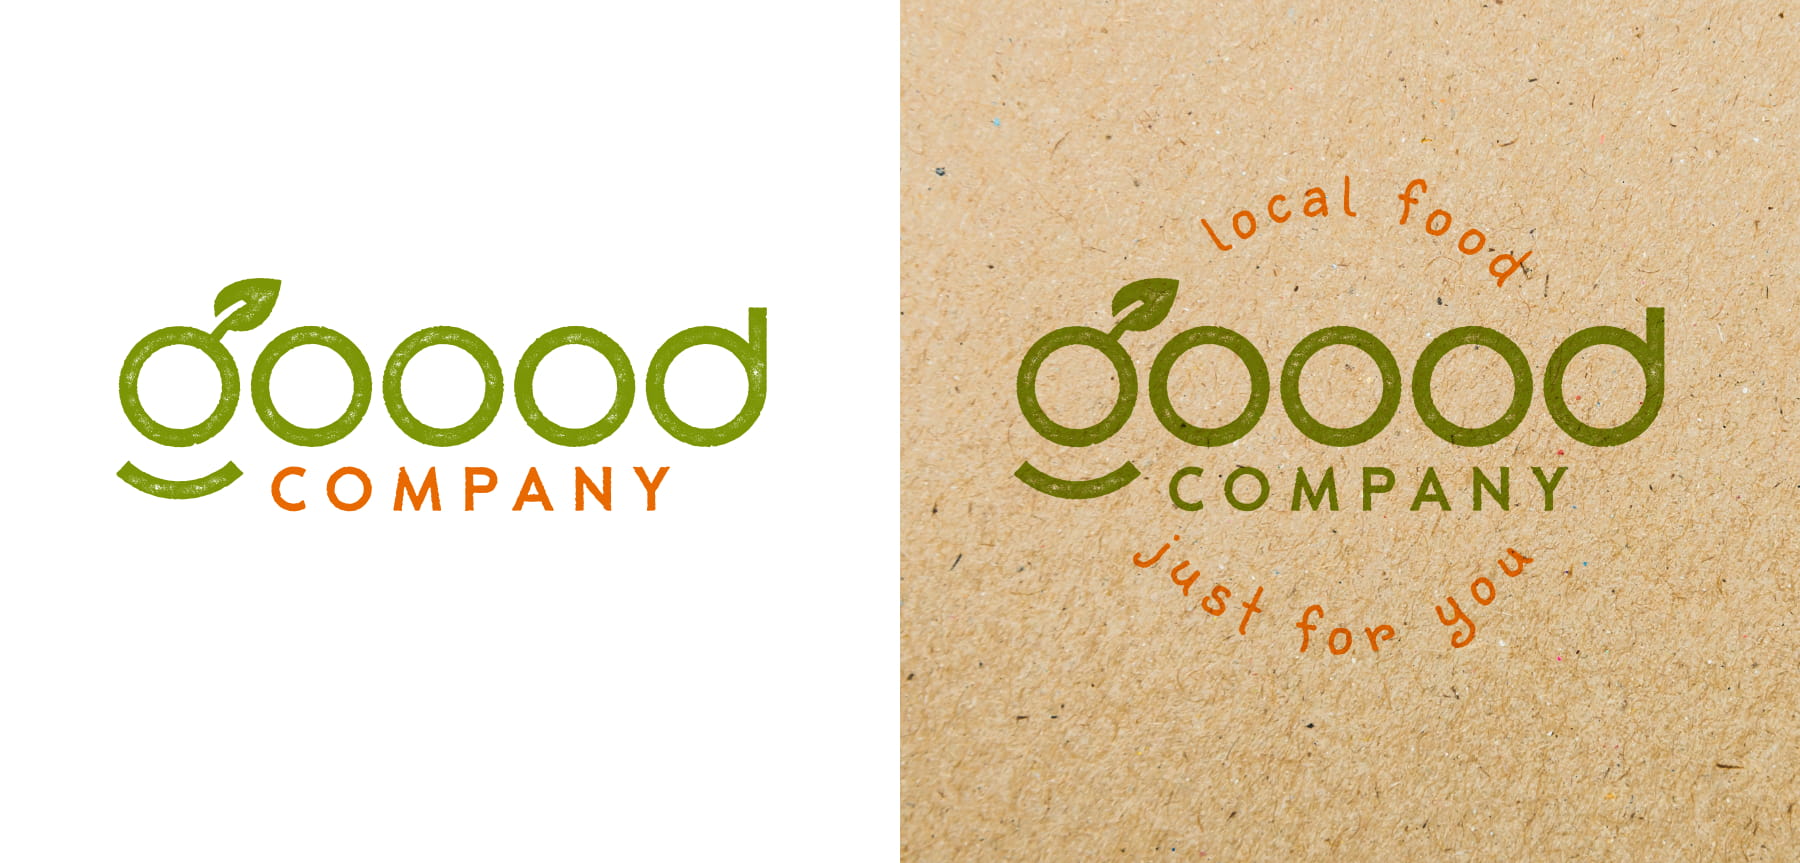 Goood Company logo - Rene Verkaart)